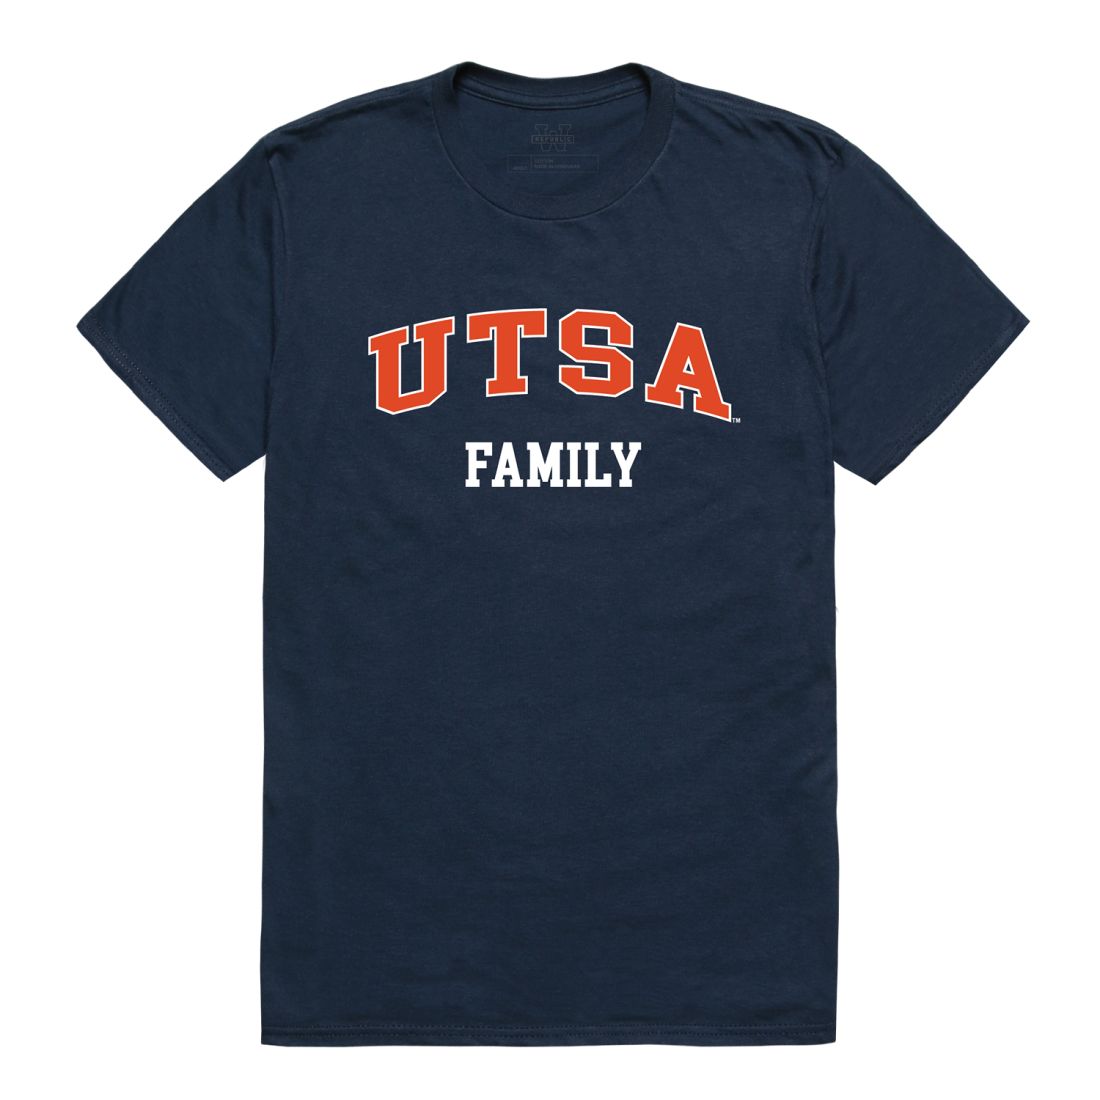 UTSA University of Texas at San Antonio Roadrunners Family T-Shirt